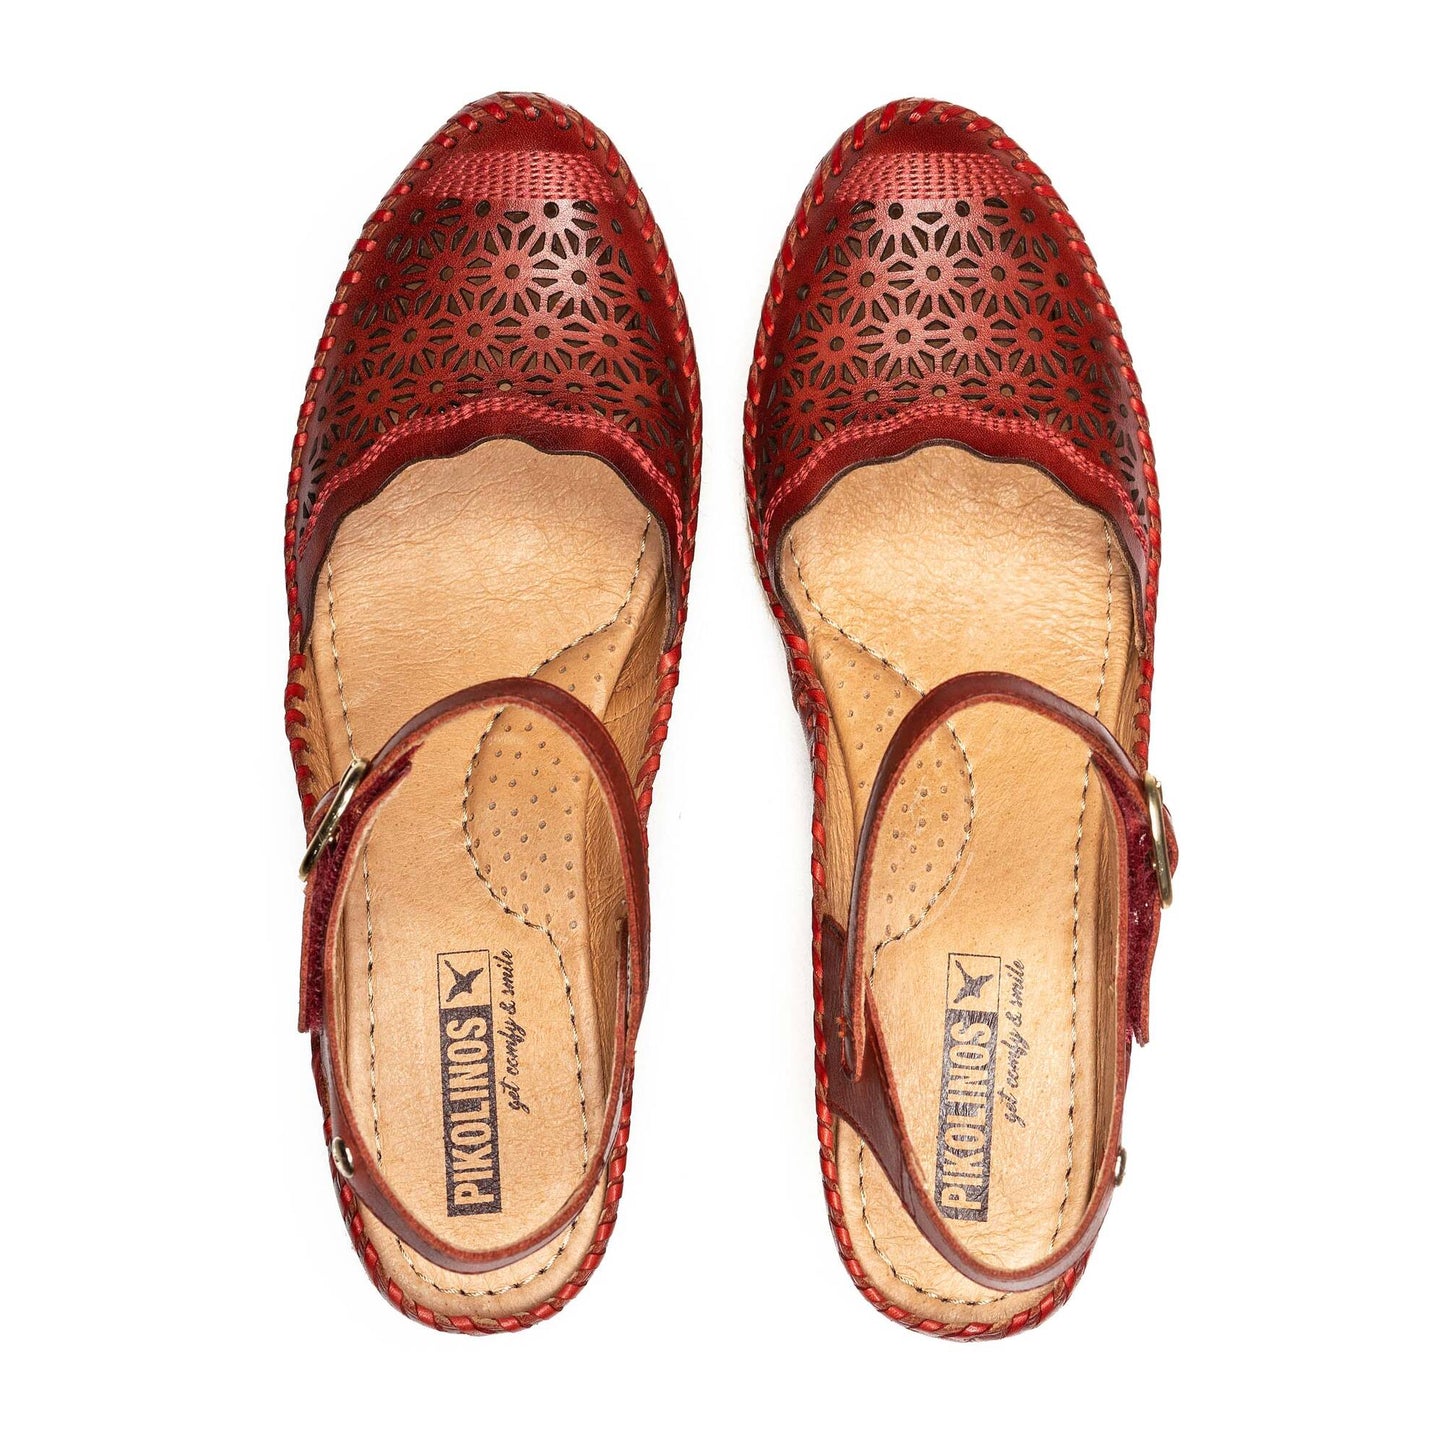 Pikolinos Women's W9Y-1508 Vila Jute Leather Wedge Sandals Sandia